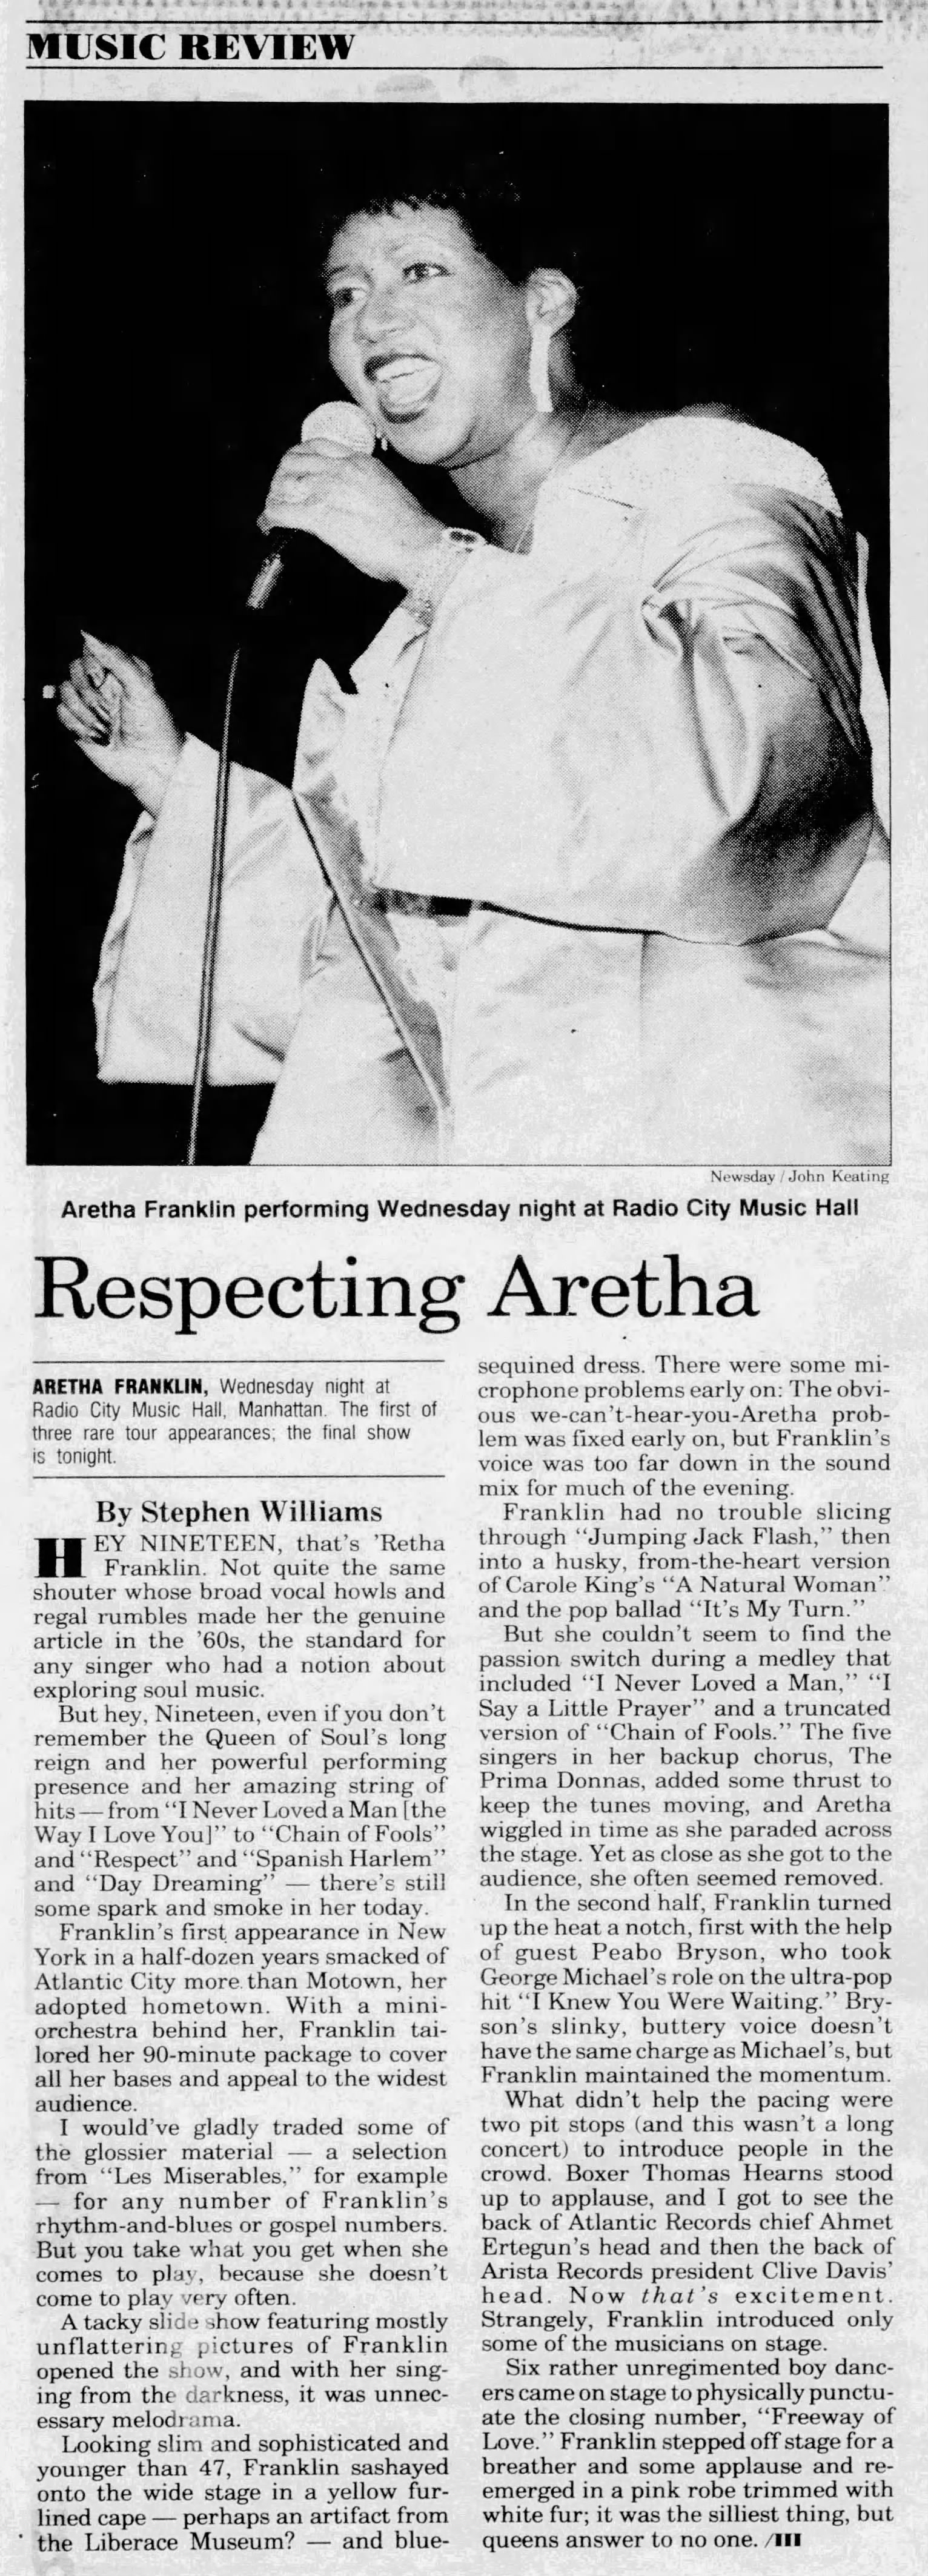 ArethaFranklin1989-07-05RadioCityMusicHallNYC (10).jpg